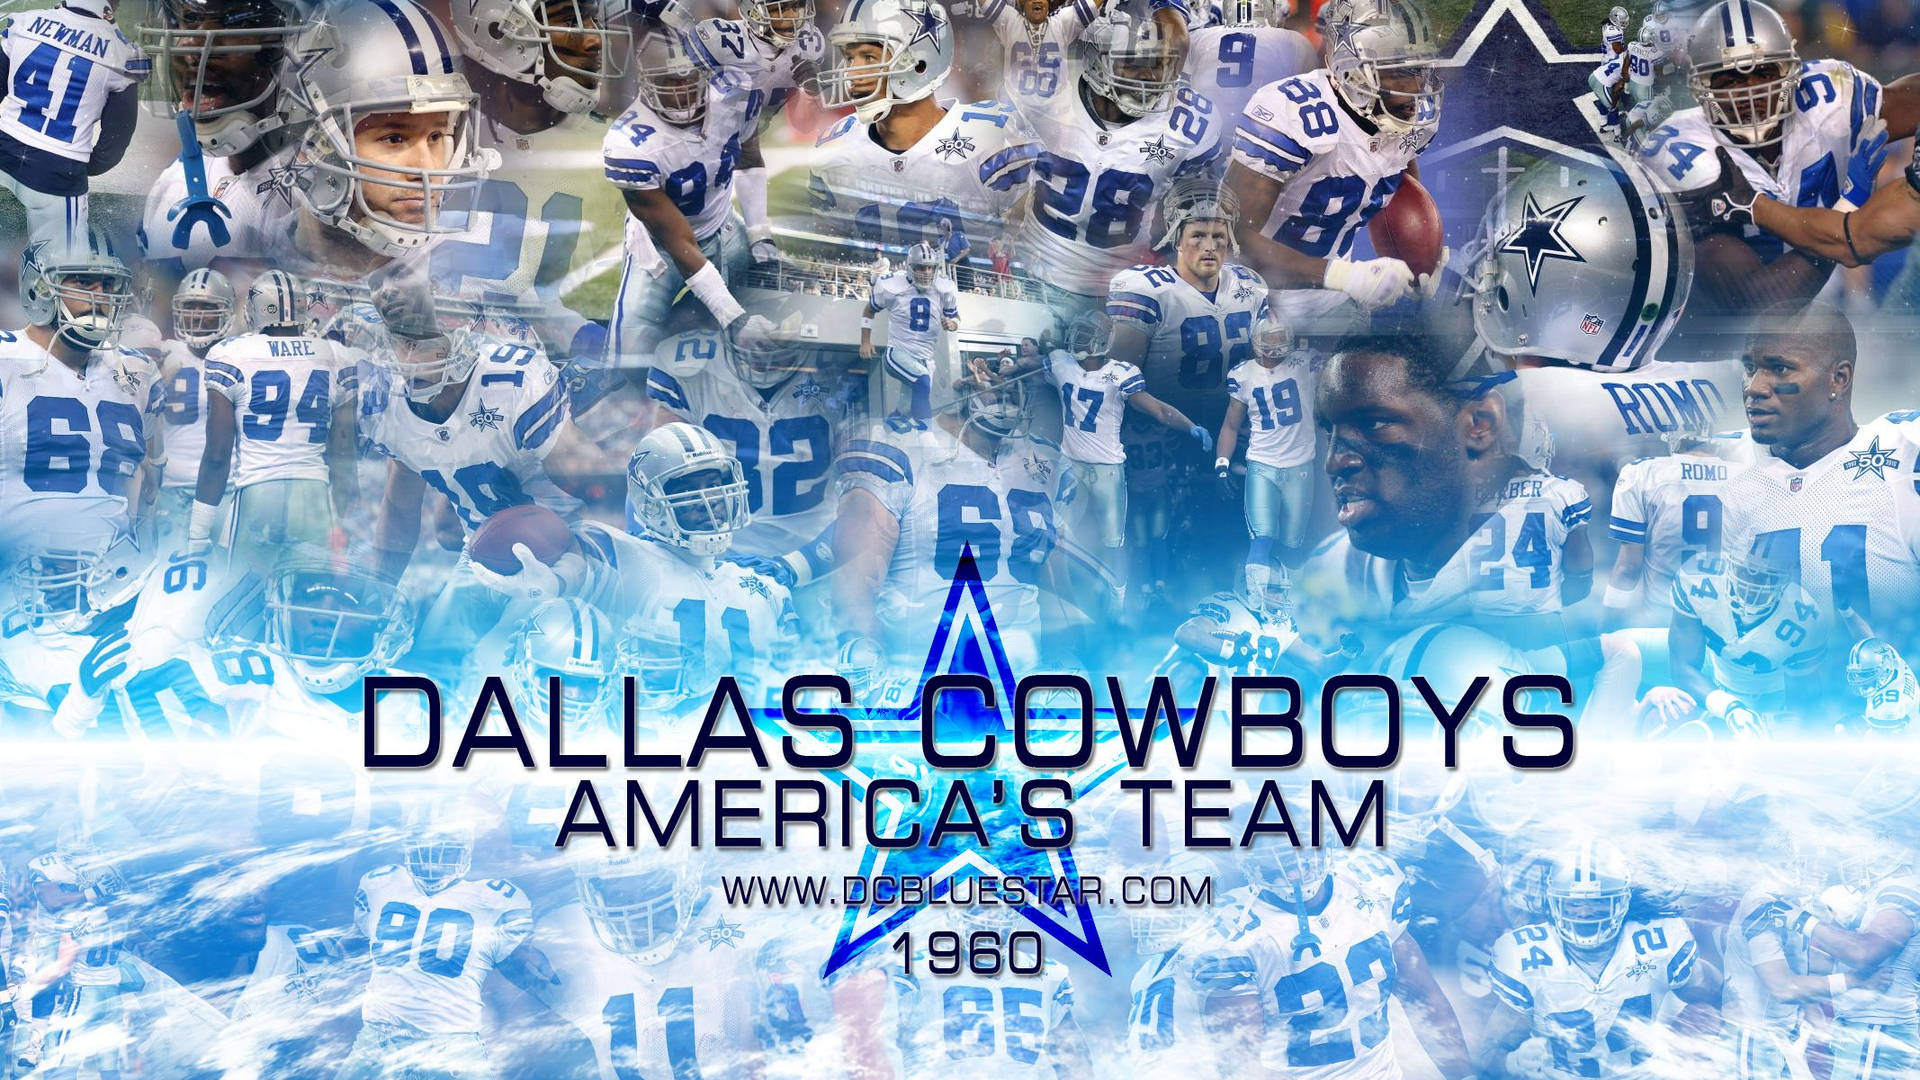 Dallas Cowboys America's Team Collage Background